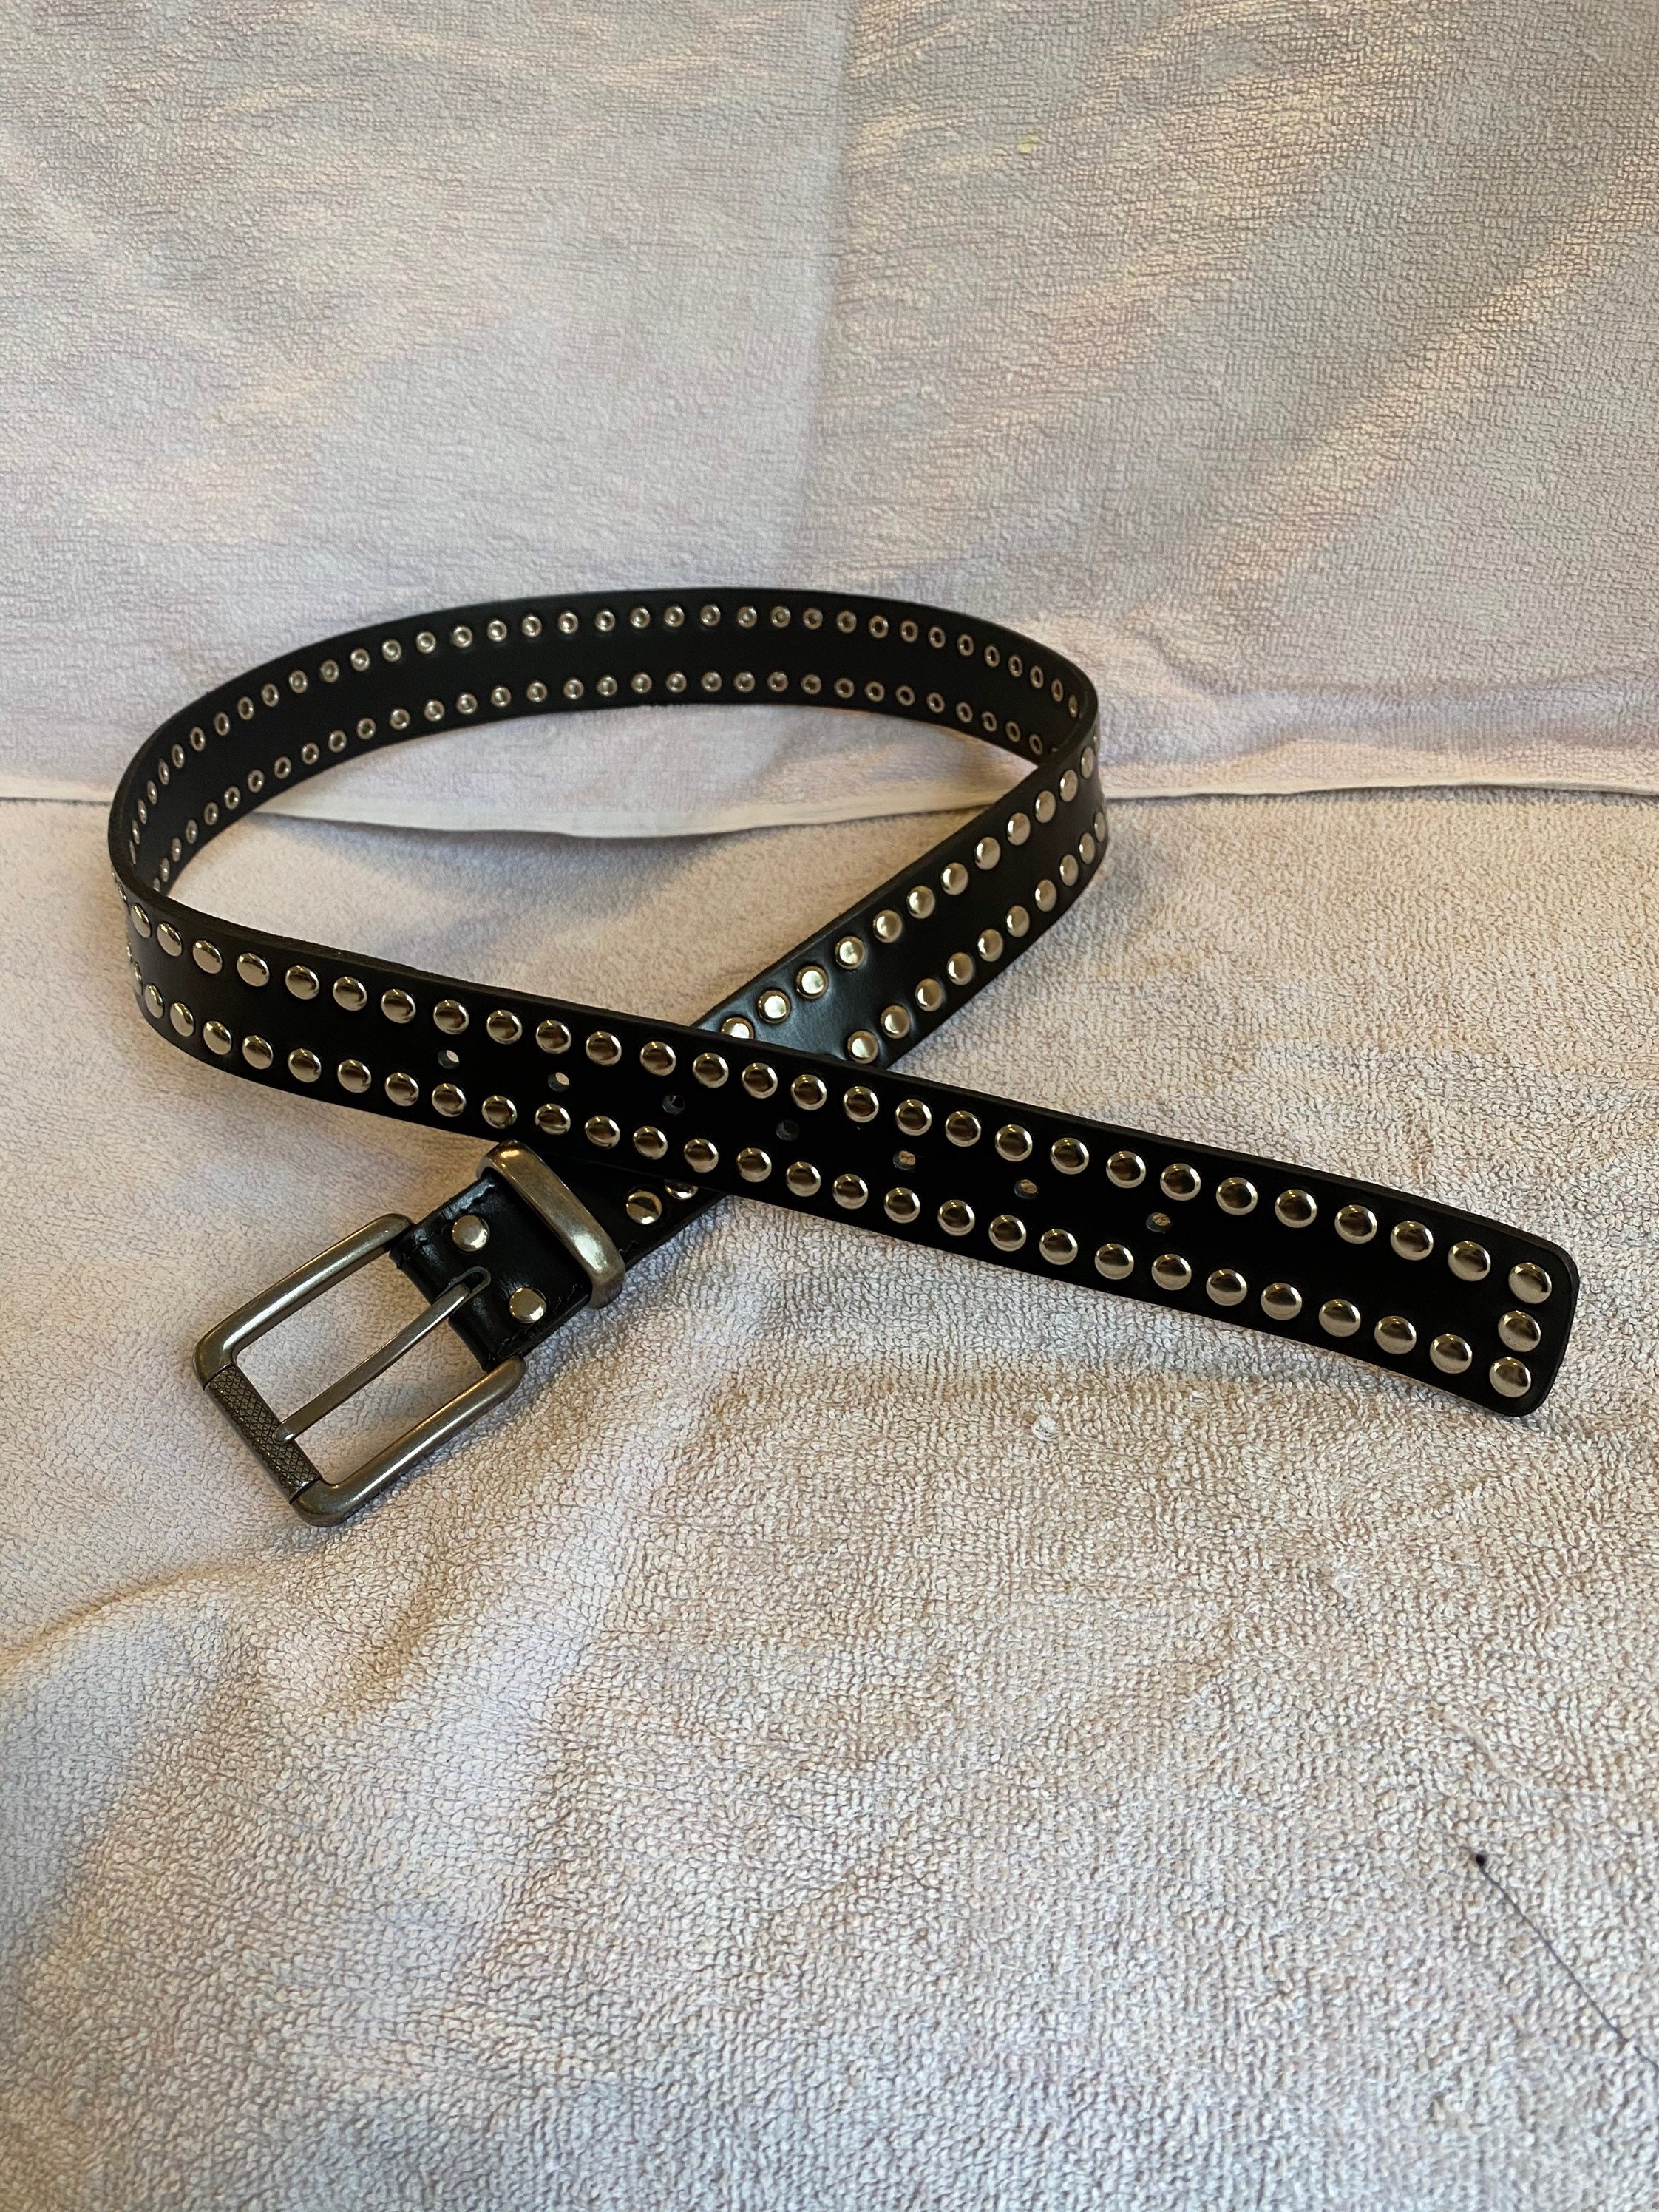 Studded belt | Etsy